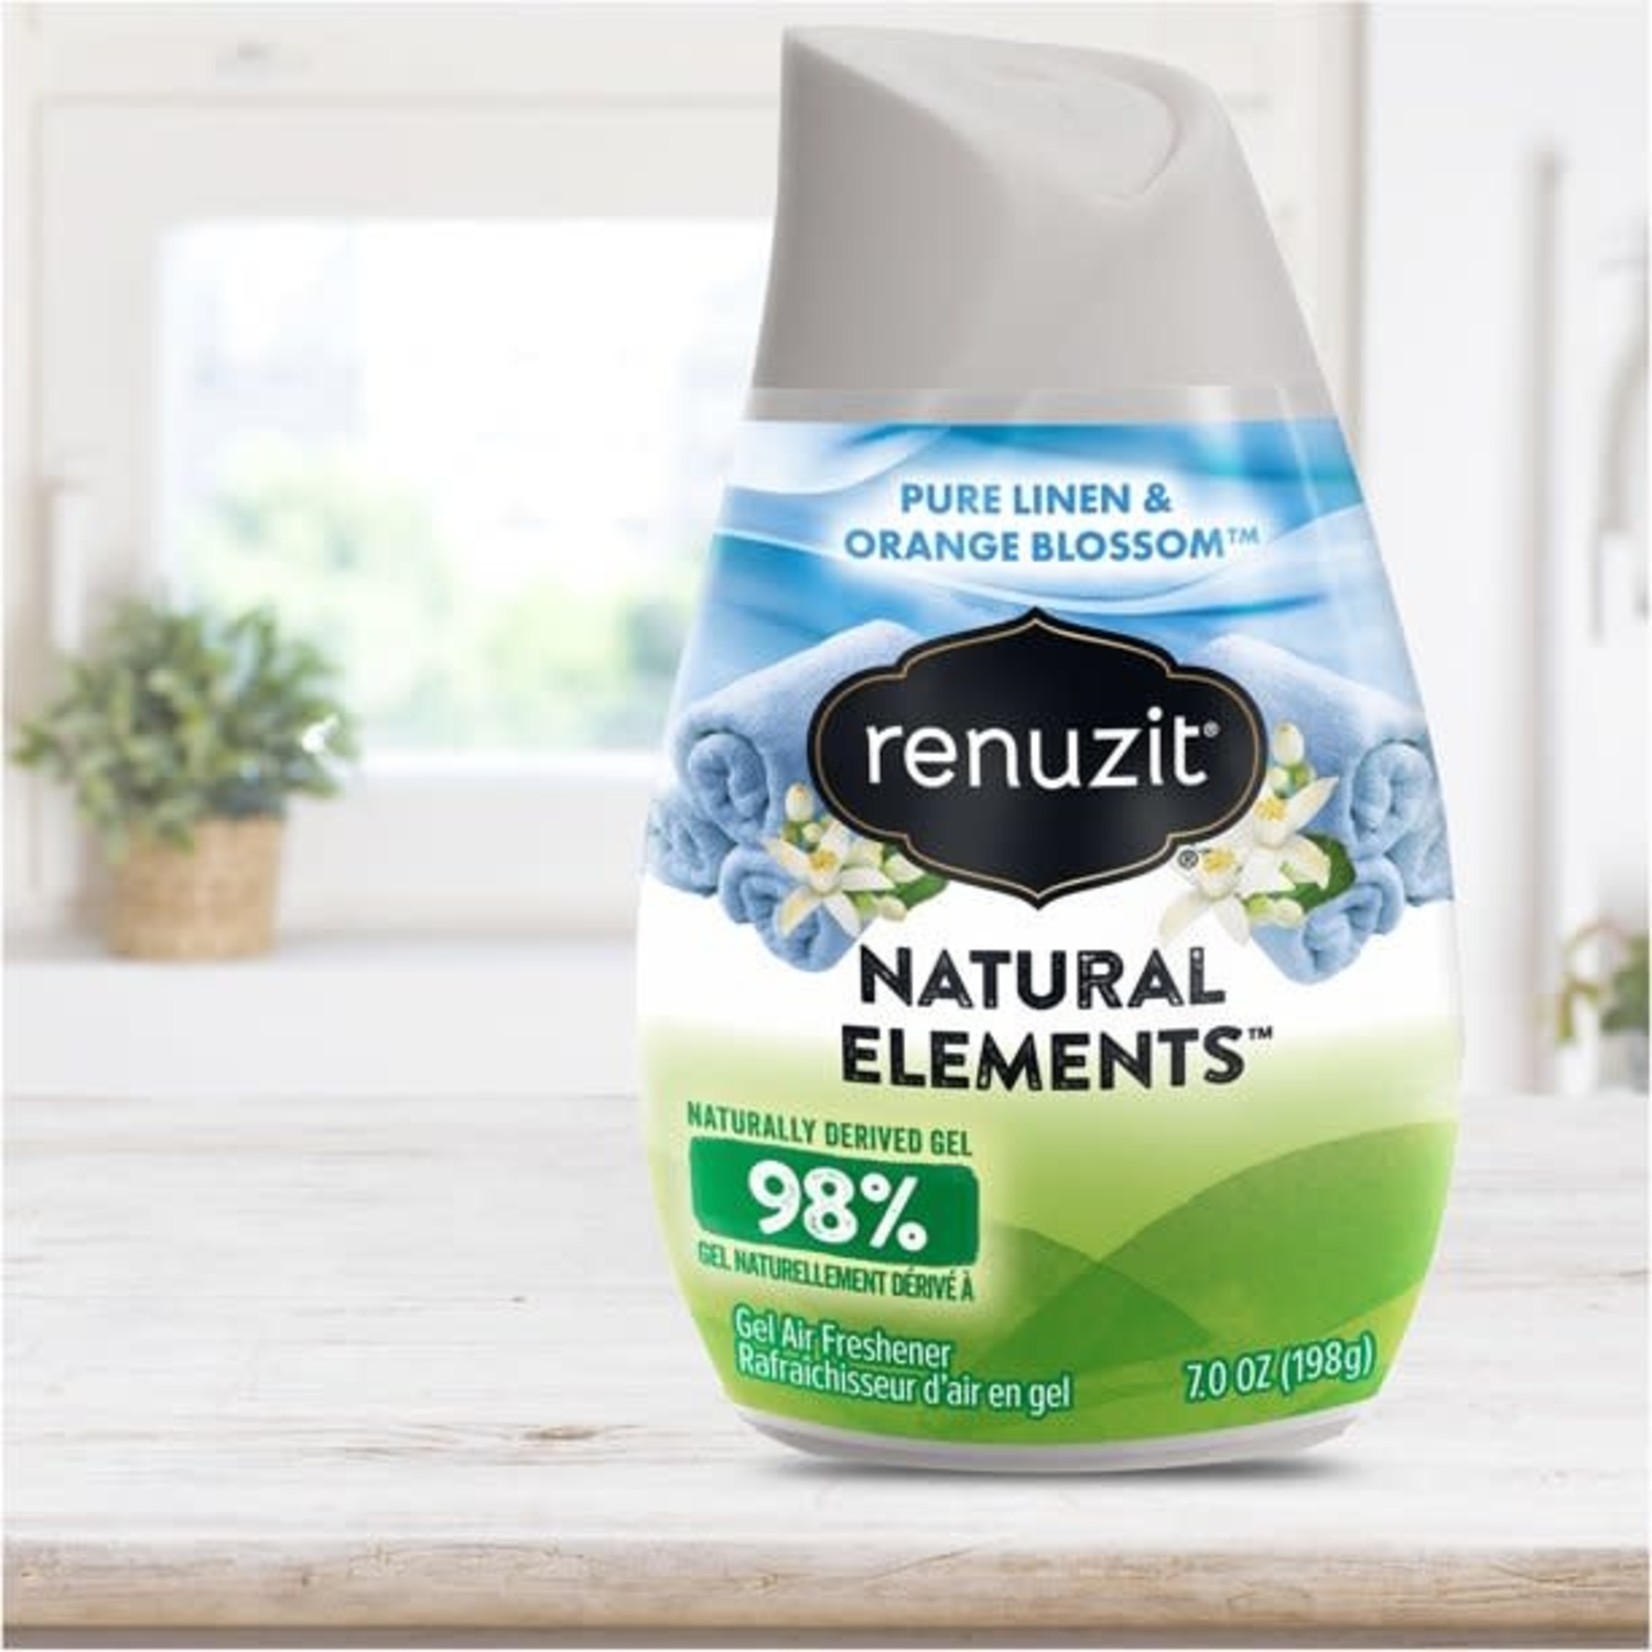 Renuzit Natural Elements Gel Air Freshener, Pure Linen & Orange Blossom 7oz - 12/case ($11.88)